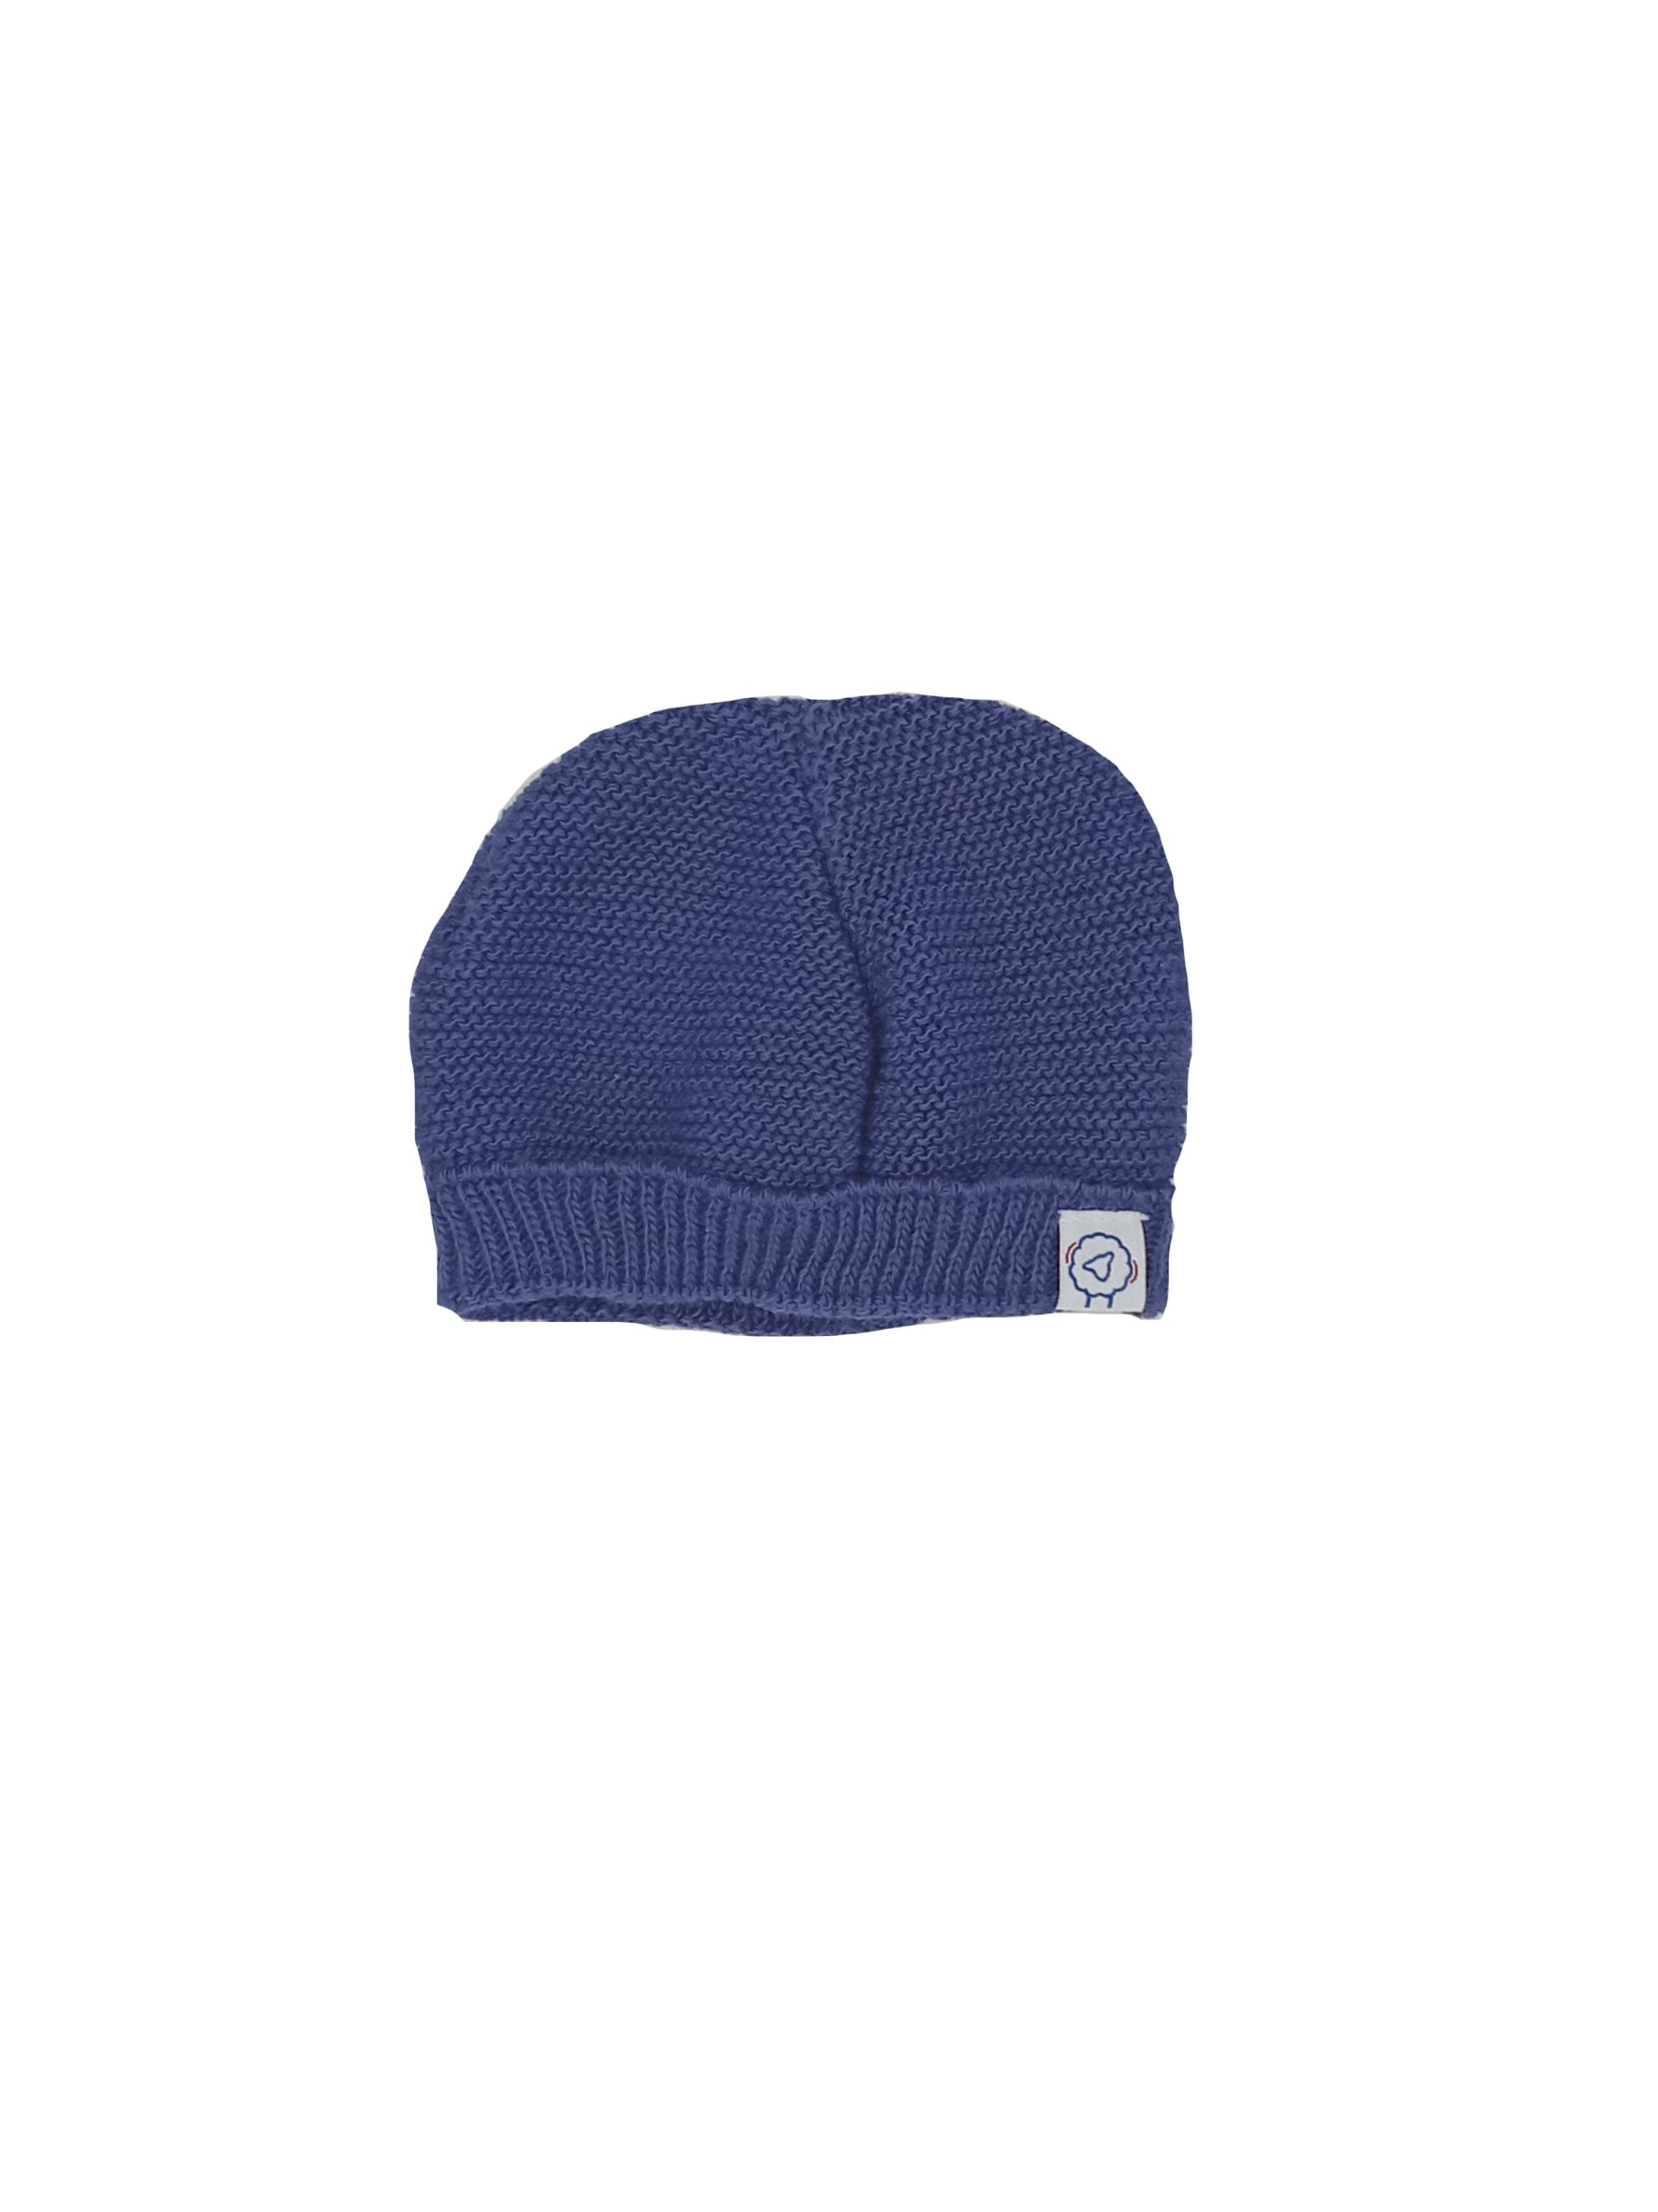 Cotton Knitted Hat - Midnight Blue Hat La Manufacture de Layette 